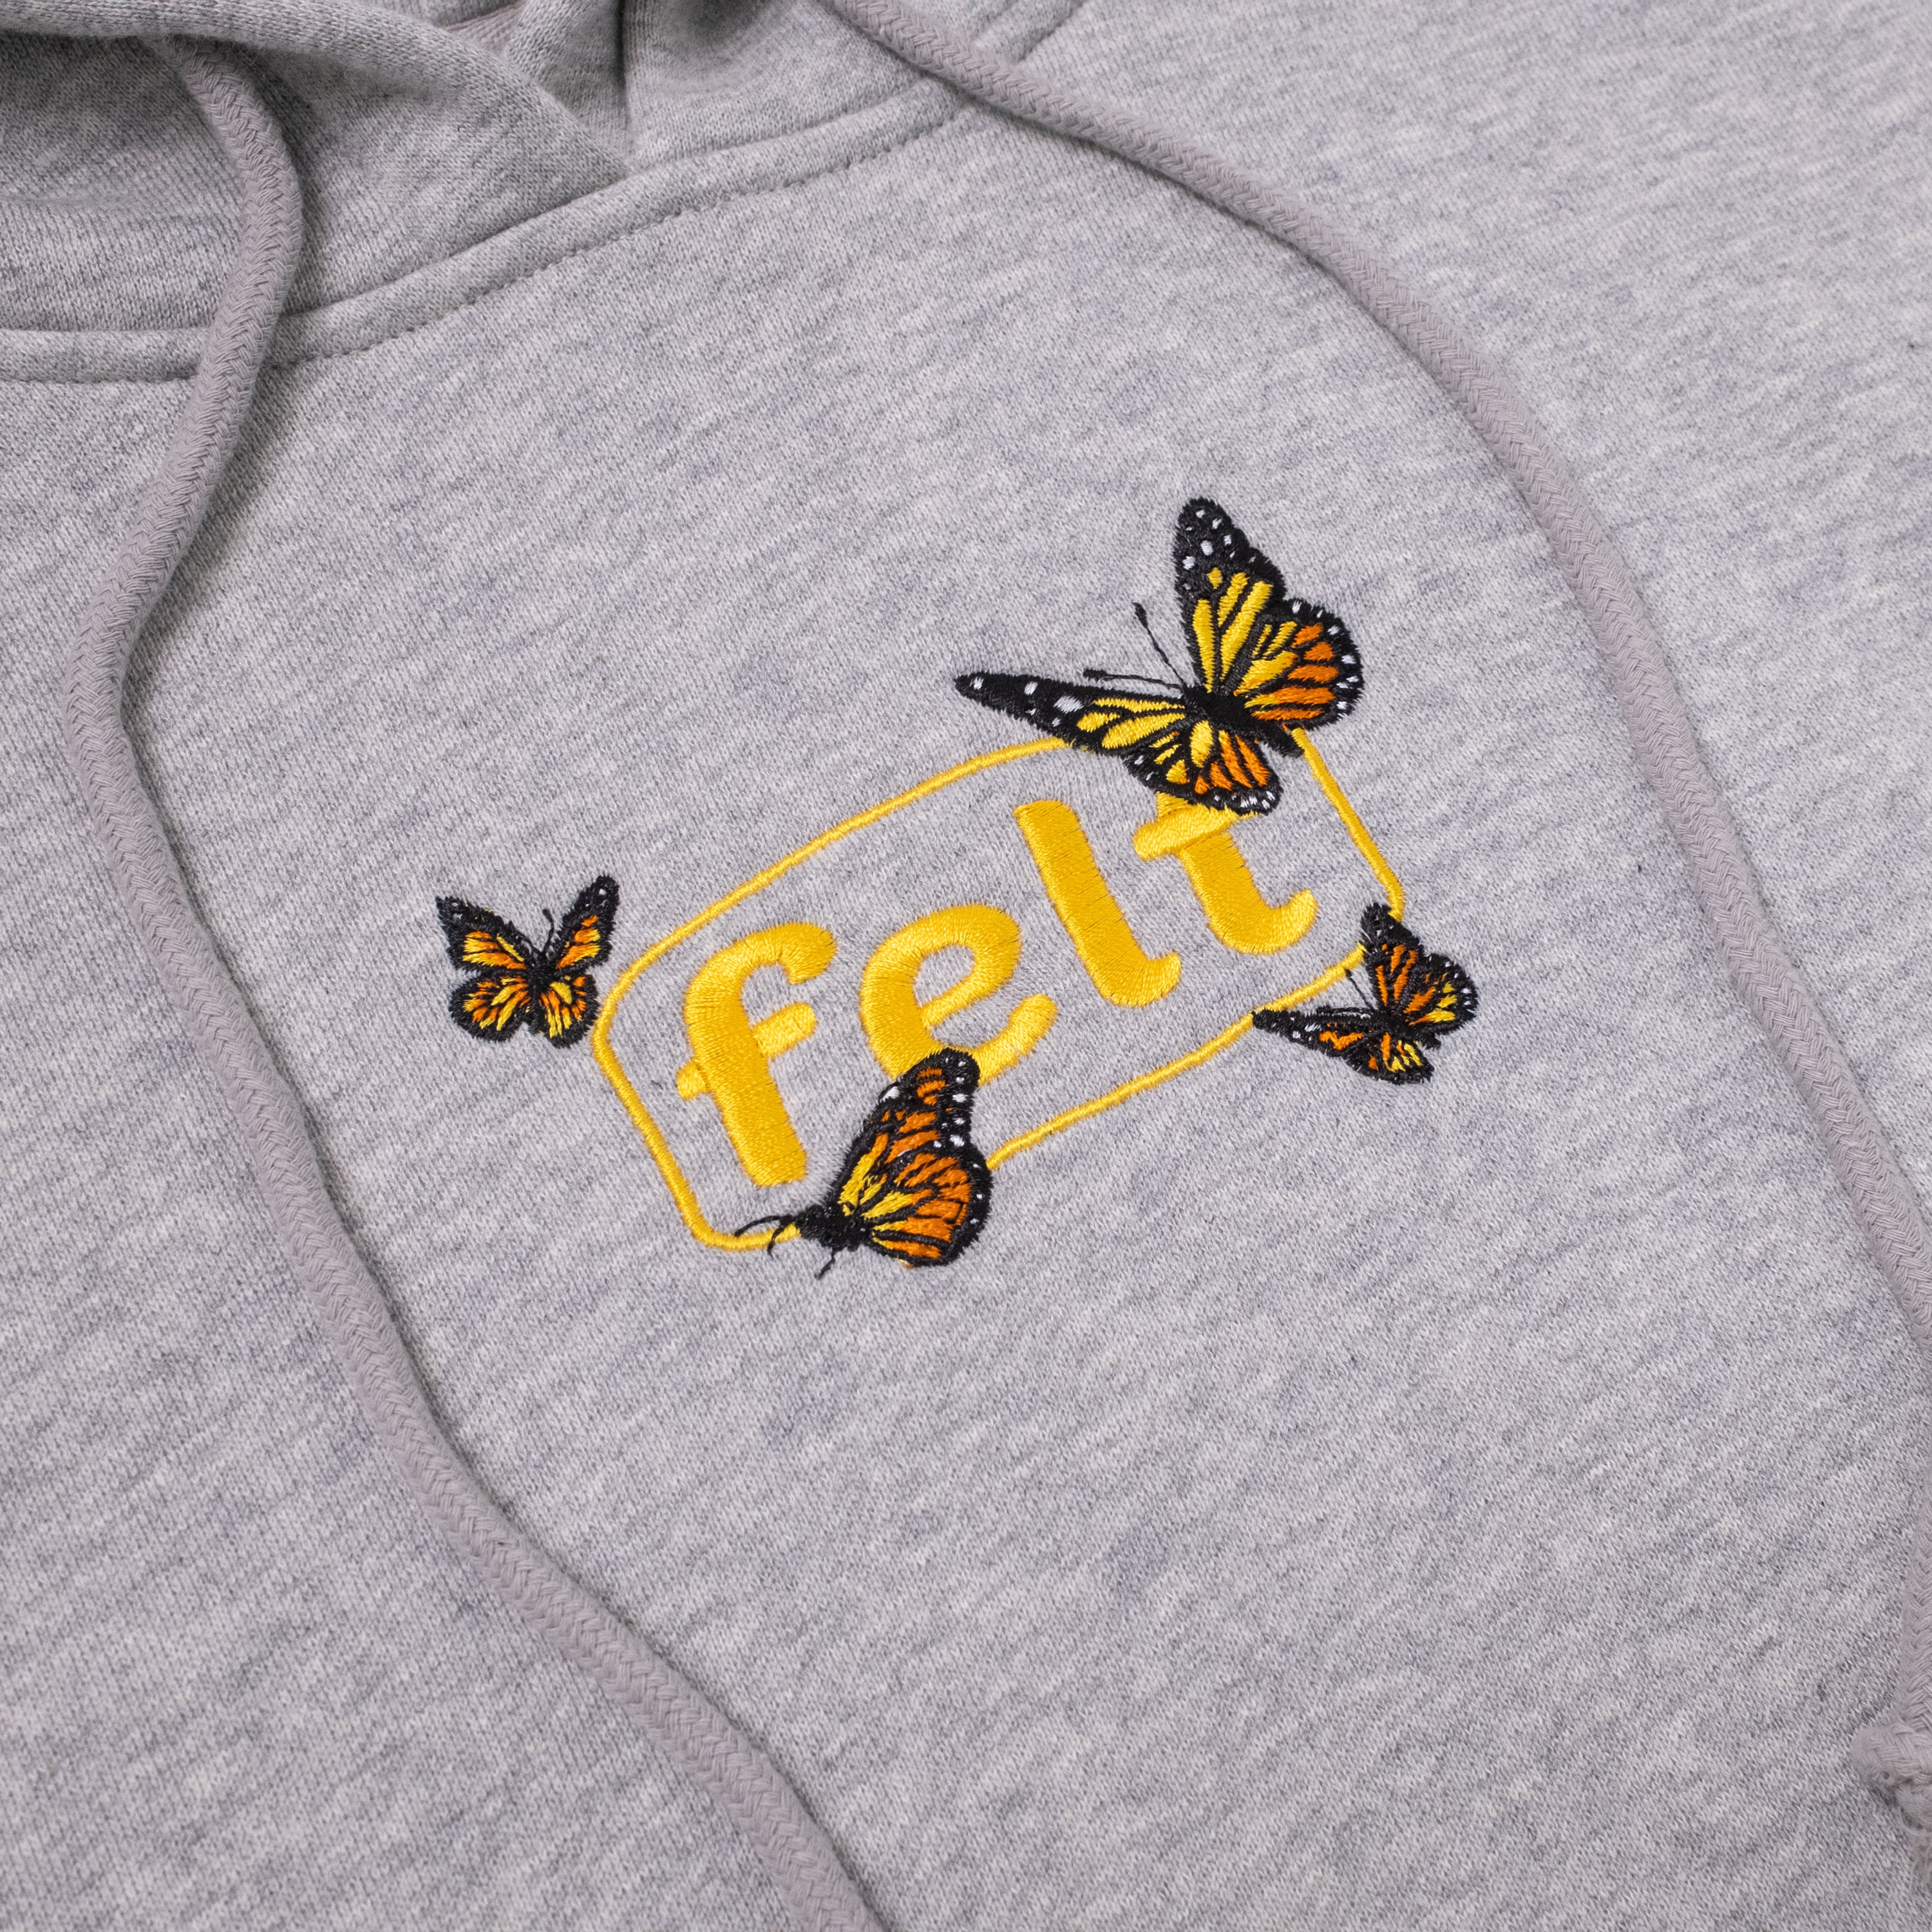 felt - Felt - Butterfly Garden Hoodie - Grey